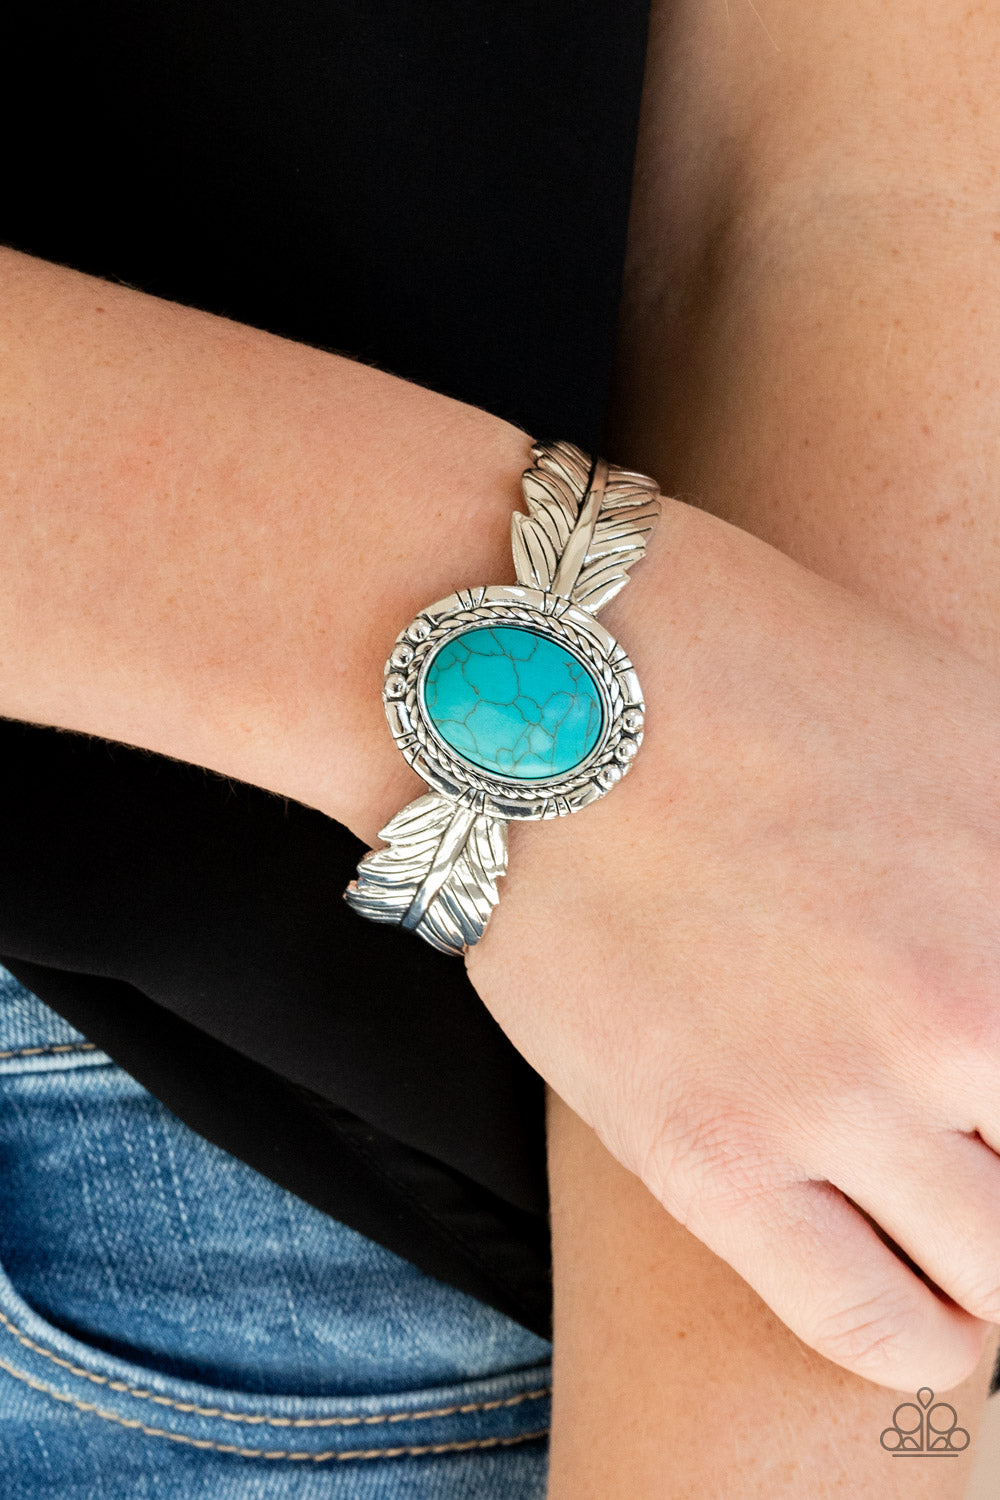 PRE-ORDER - Paparazzi Western Wings - Blue Turquoise Stone - Bracelet - $5 Jewelry with Ashley Swint